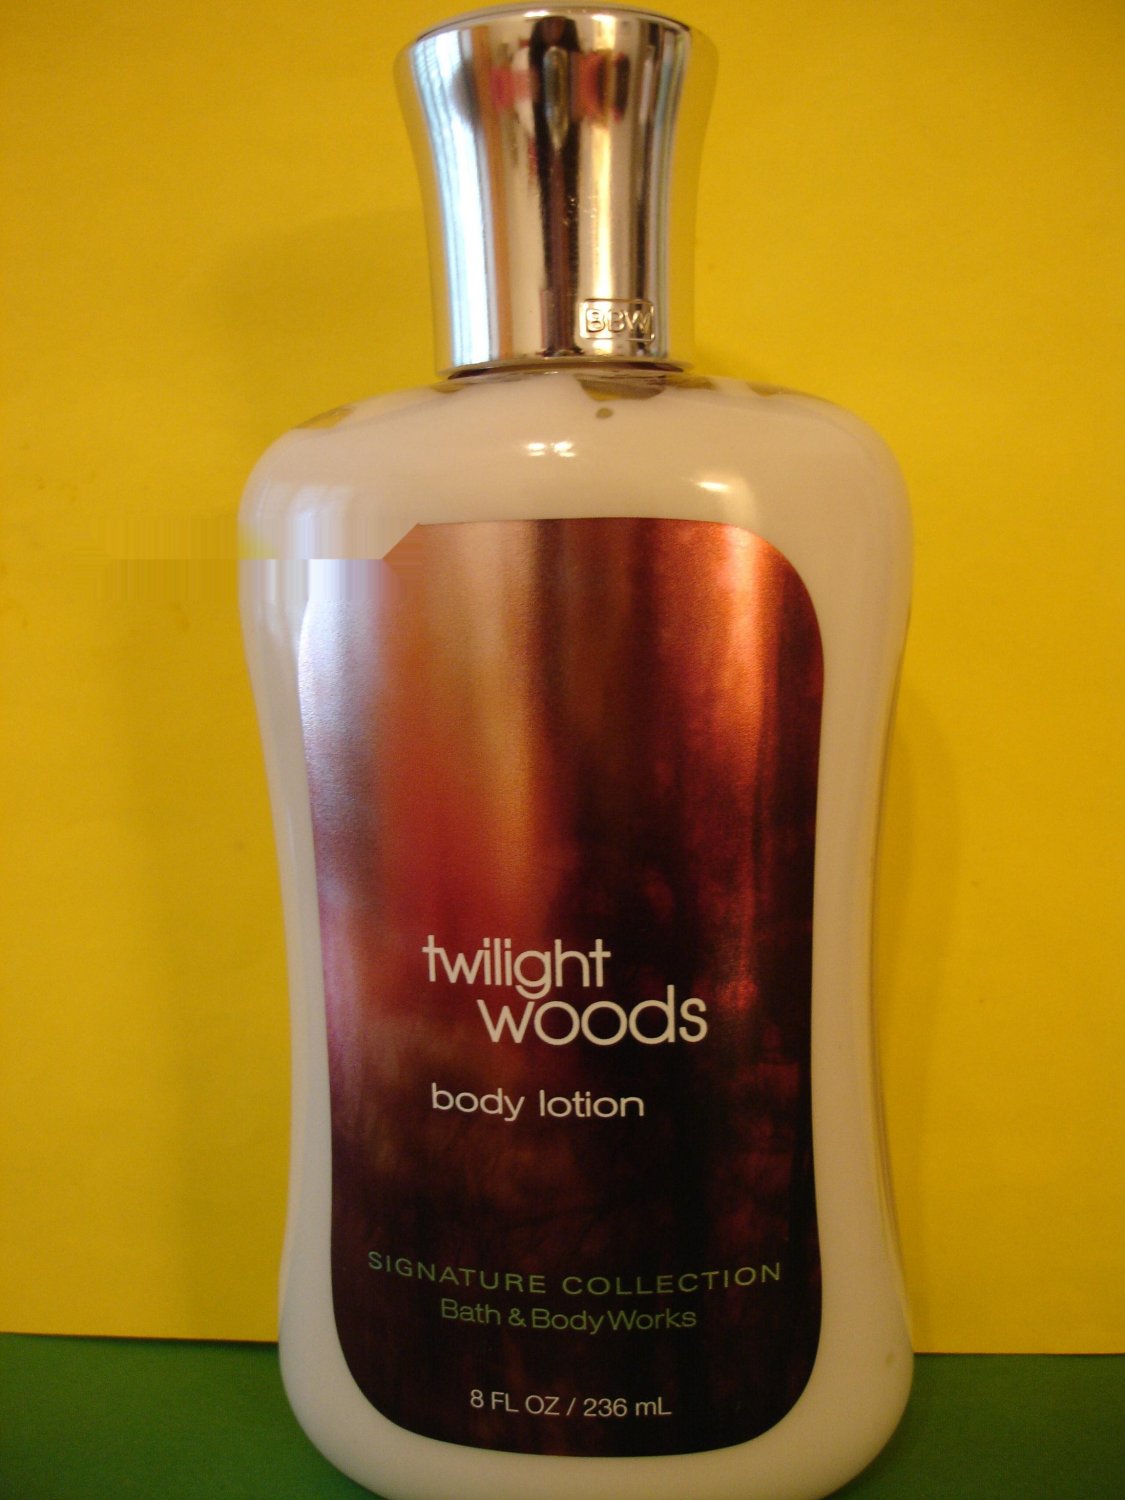 Bath & Body Works Twilight Woods Body Lotion Full Size